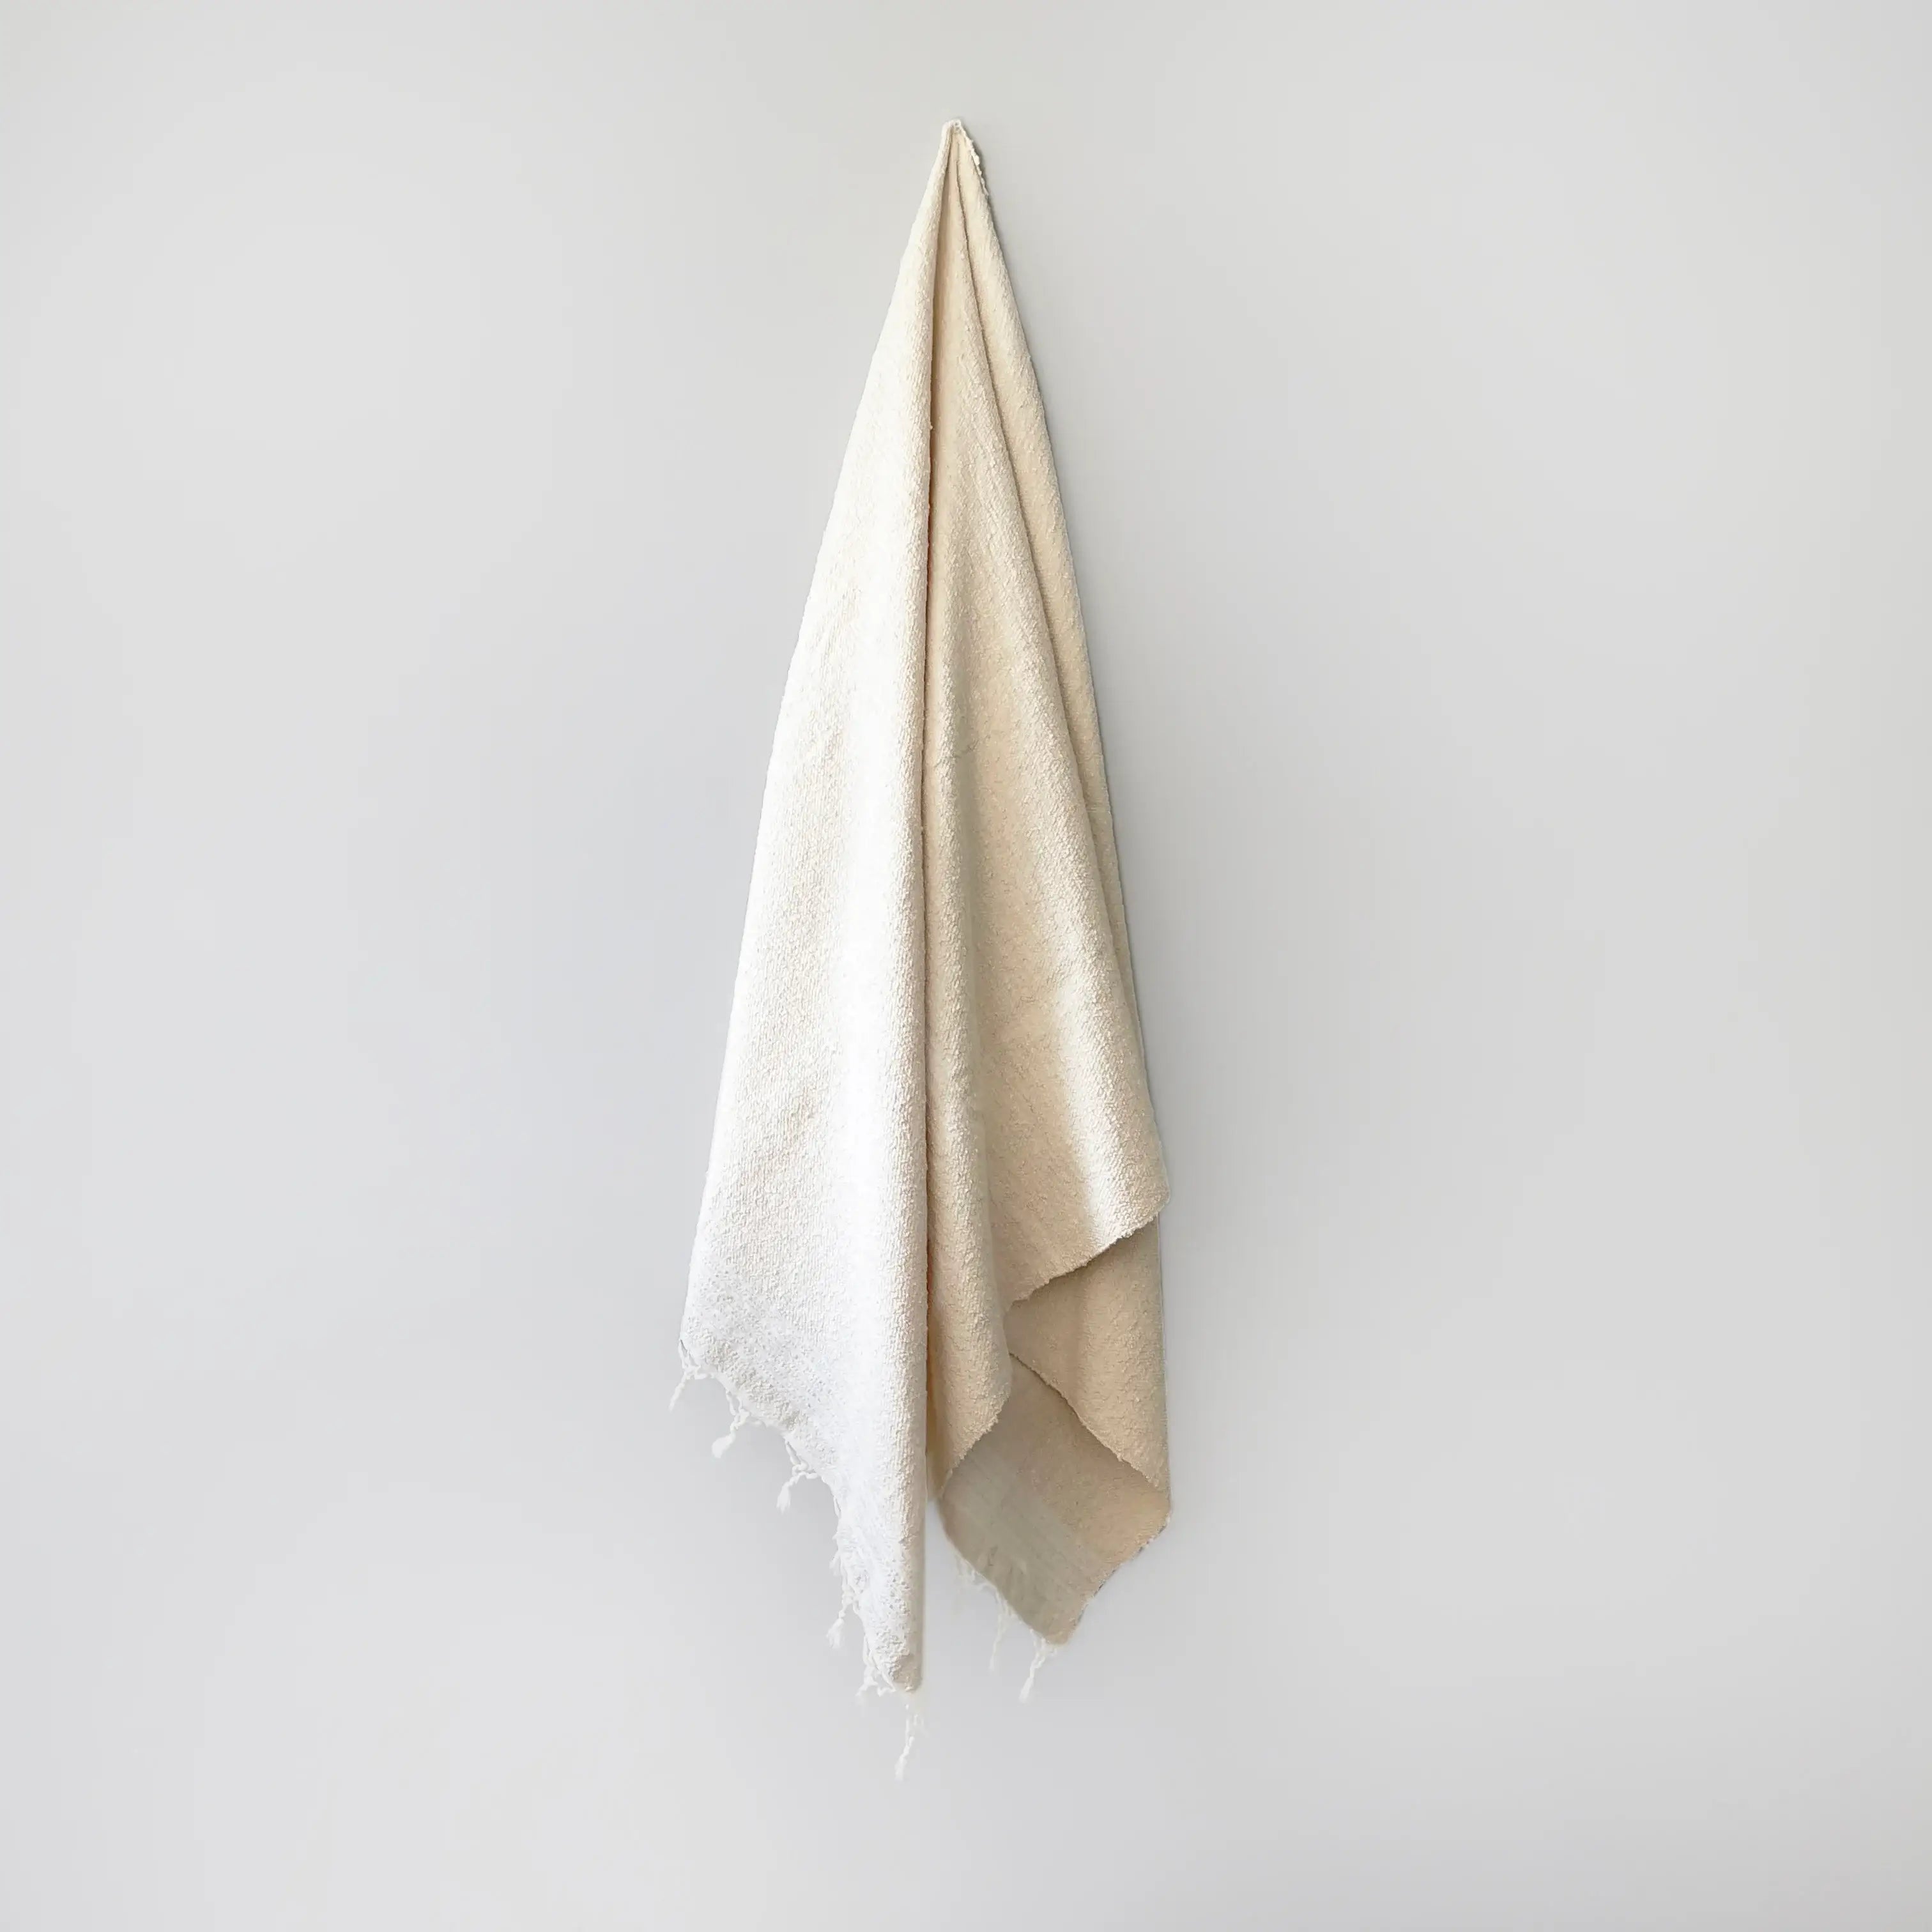 Dounia home bath/ beach towel in Ivory made of Organic cotton, Model: Baya